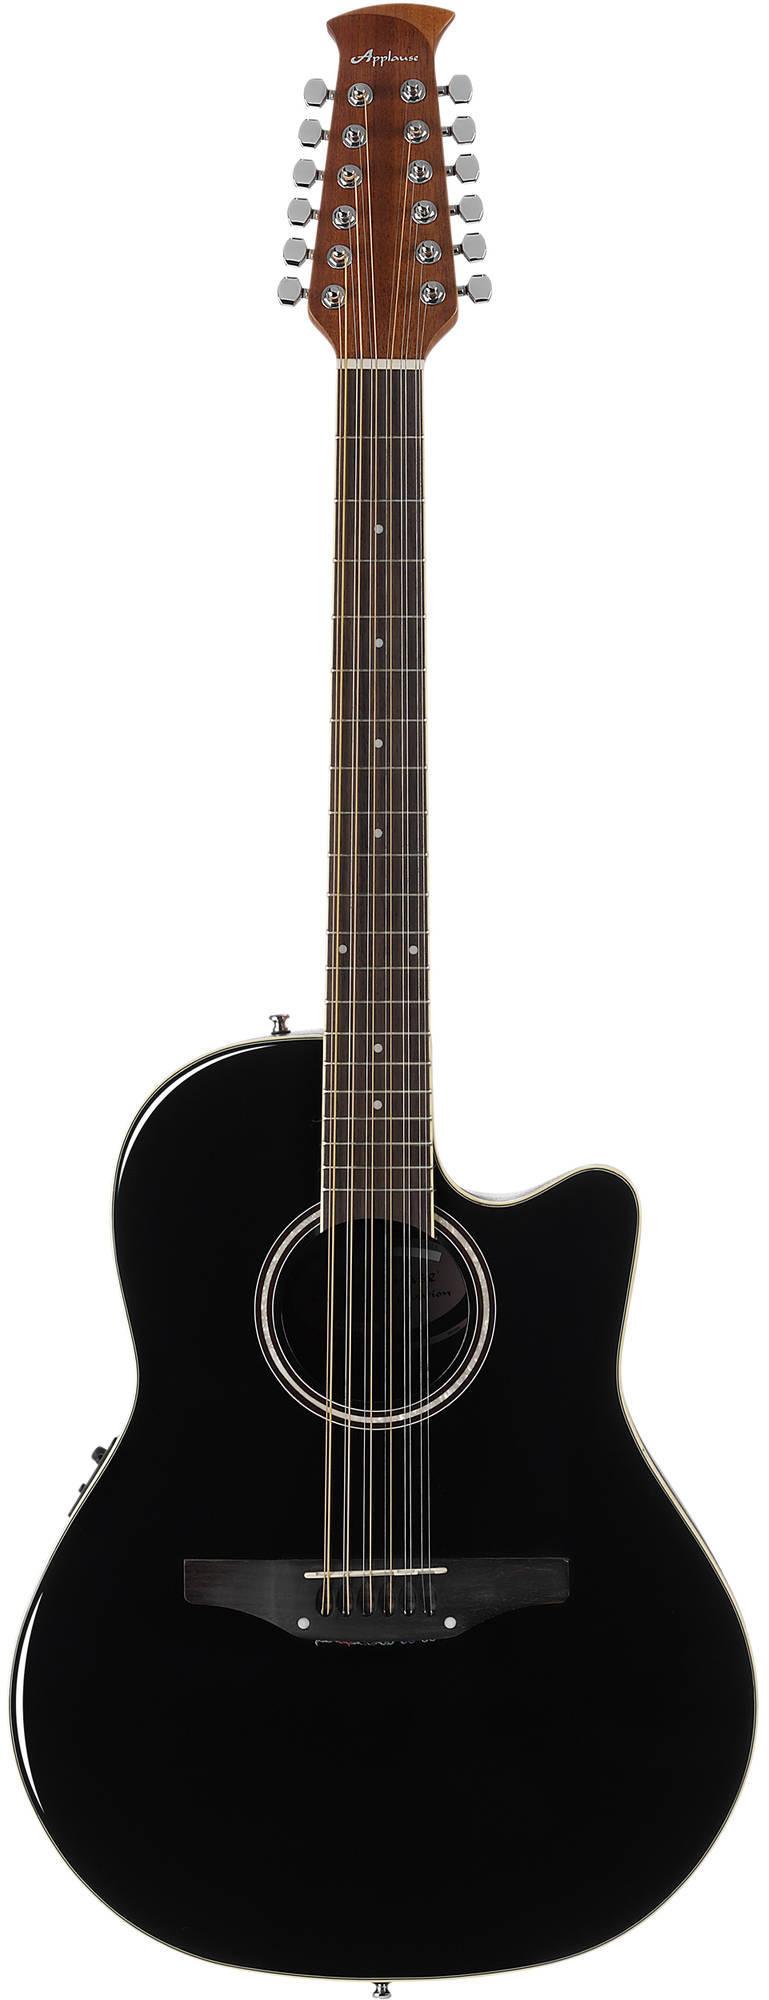 Двенадцатиструнная гитара APPLAUSE AB2412II-5 Balladeer Mid Cutaway Black